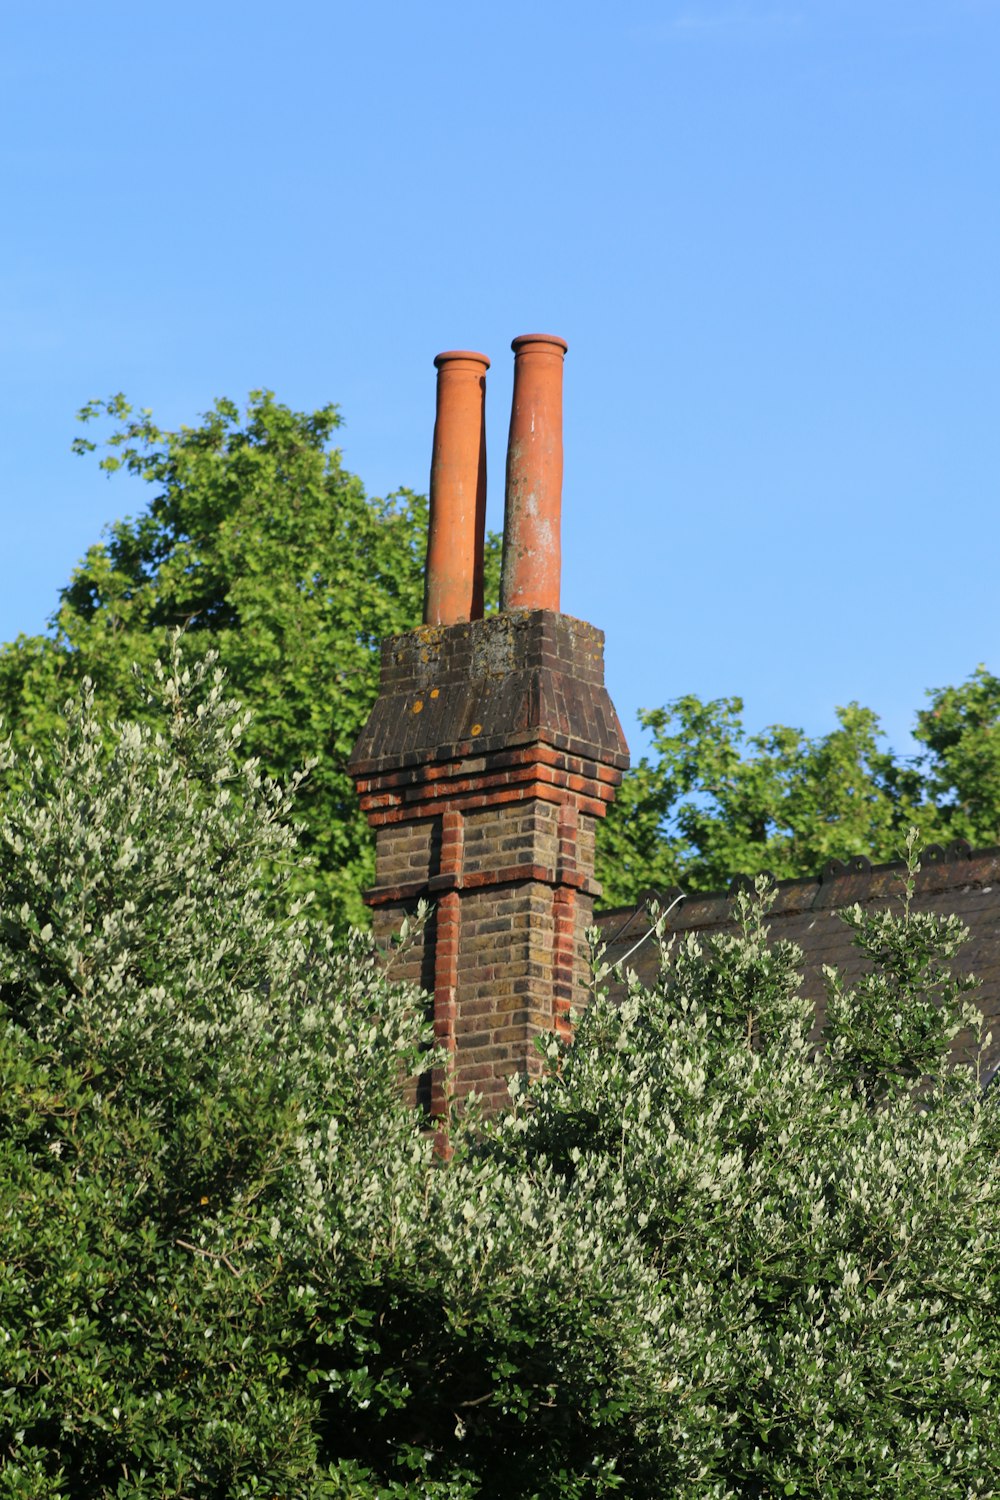 a brick chimney on a building